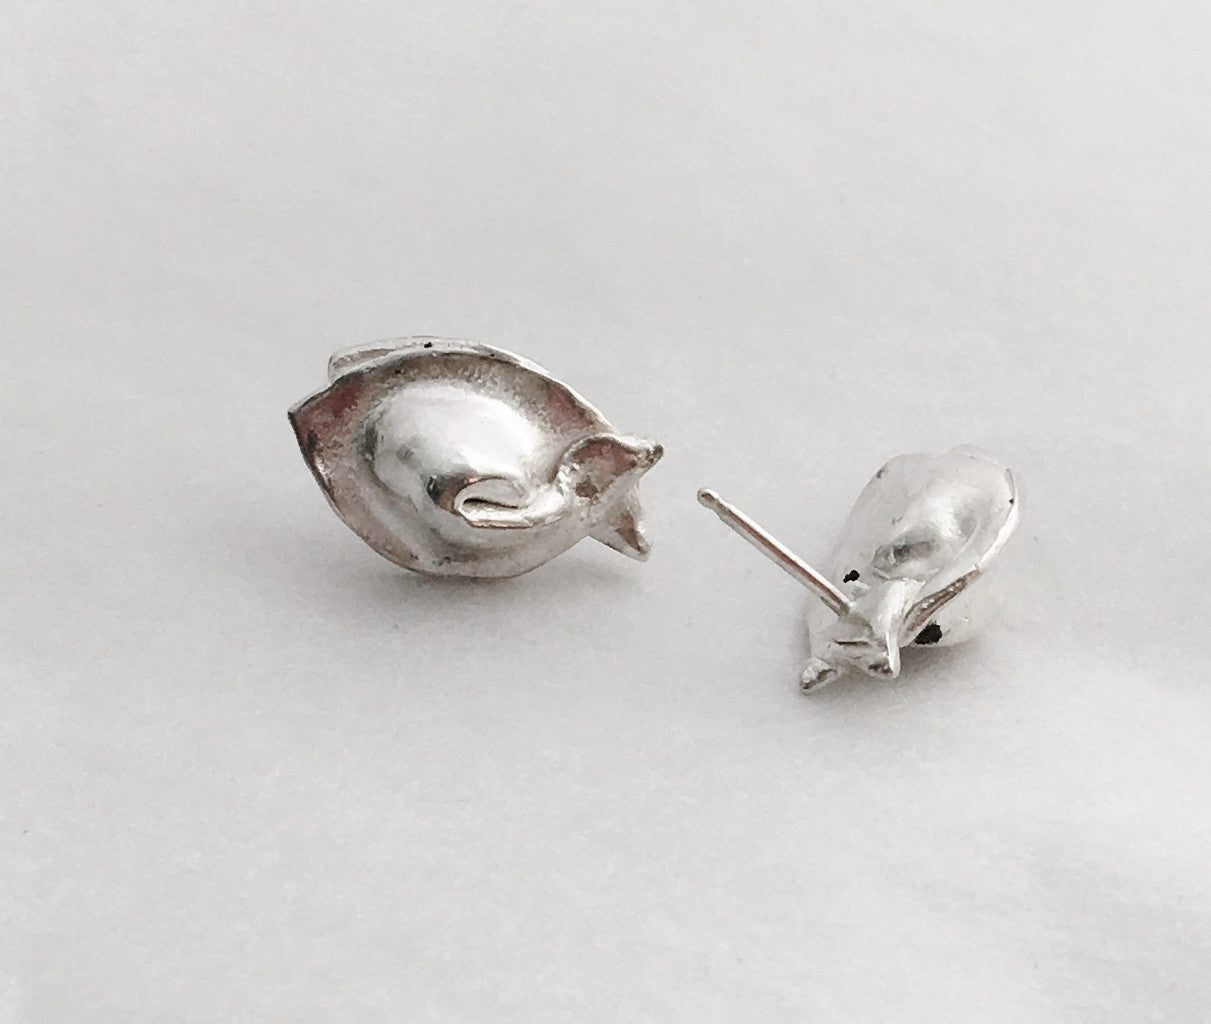 Chinese Wonton Dumpling Stud Earrings in Sterling Silver